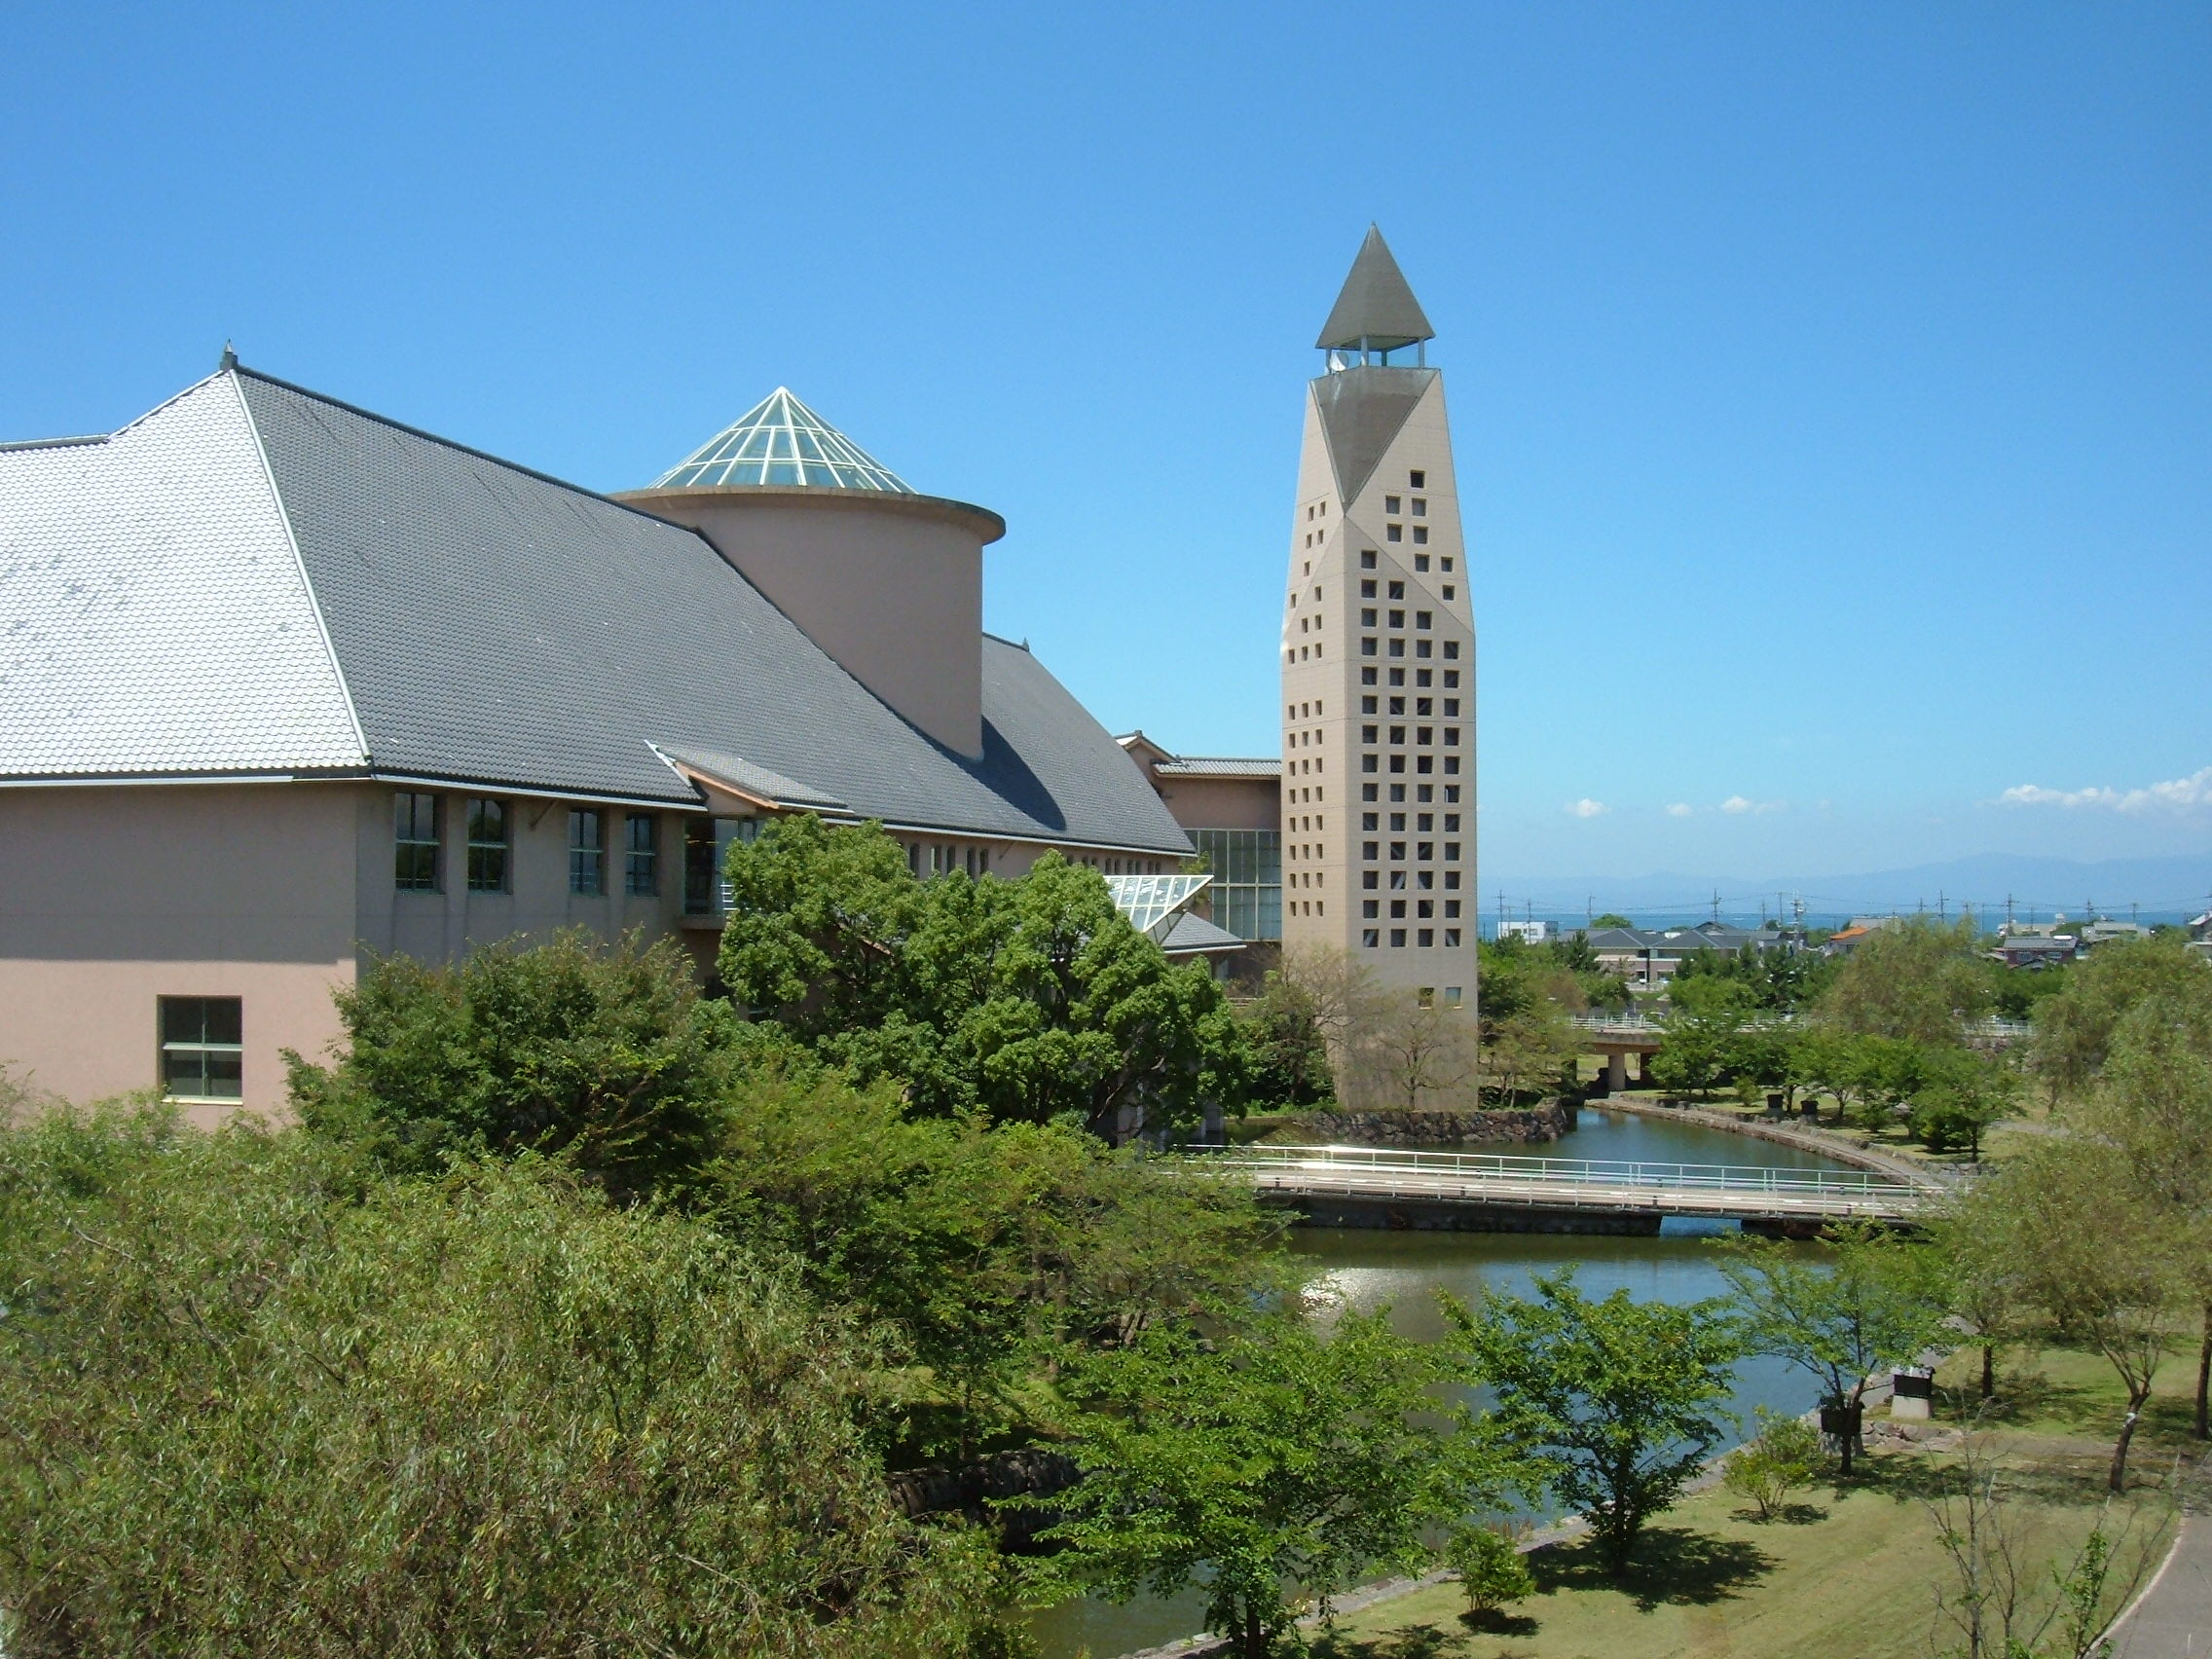 The University of Shiga Prefecture 日本語: 滋賀県立大学